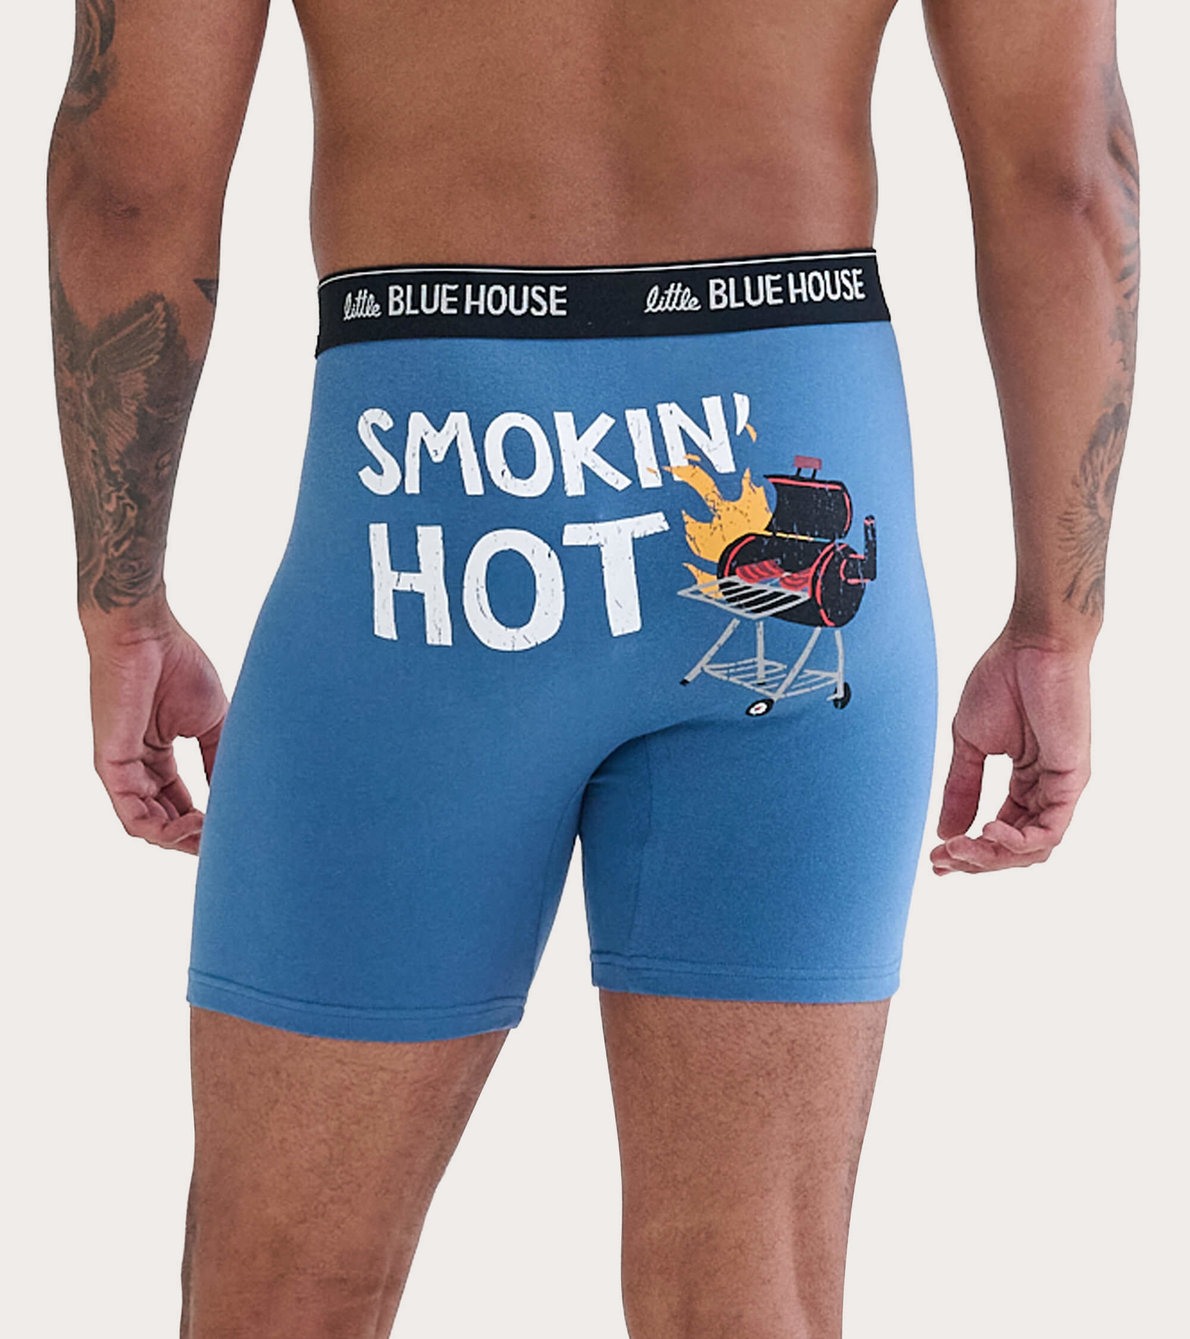 View larger image of Smokin Hot Men's Boxer Brief